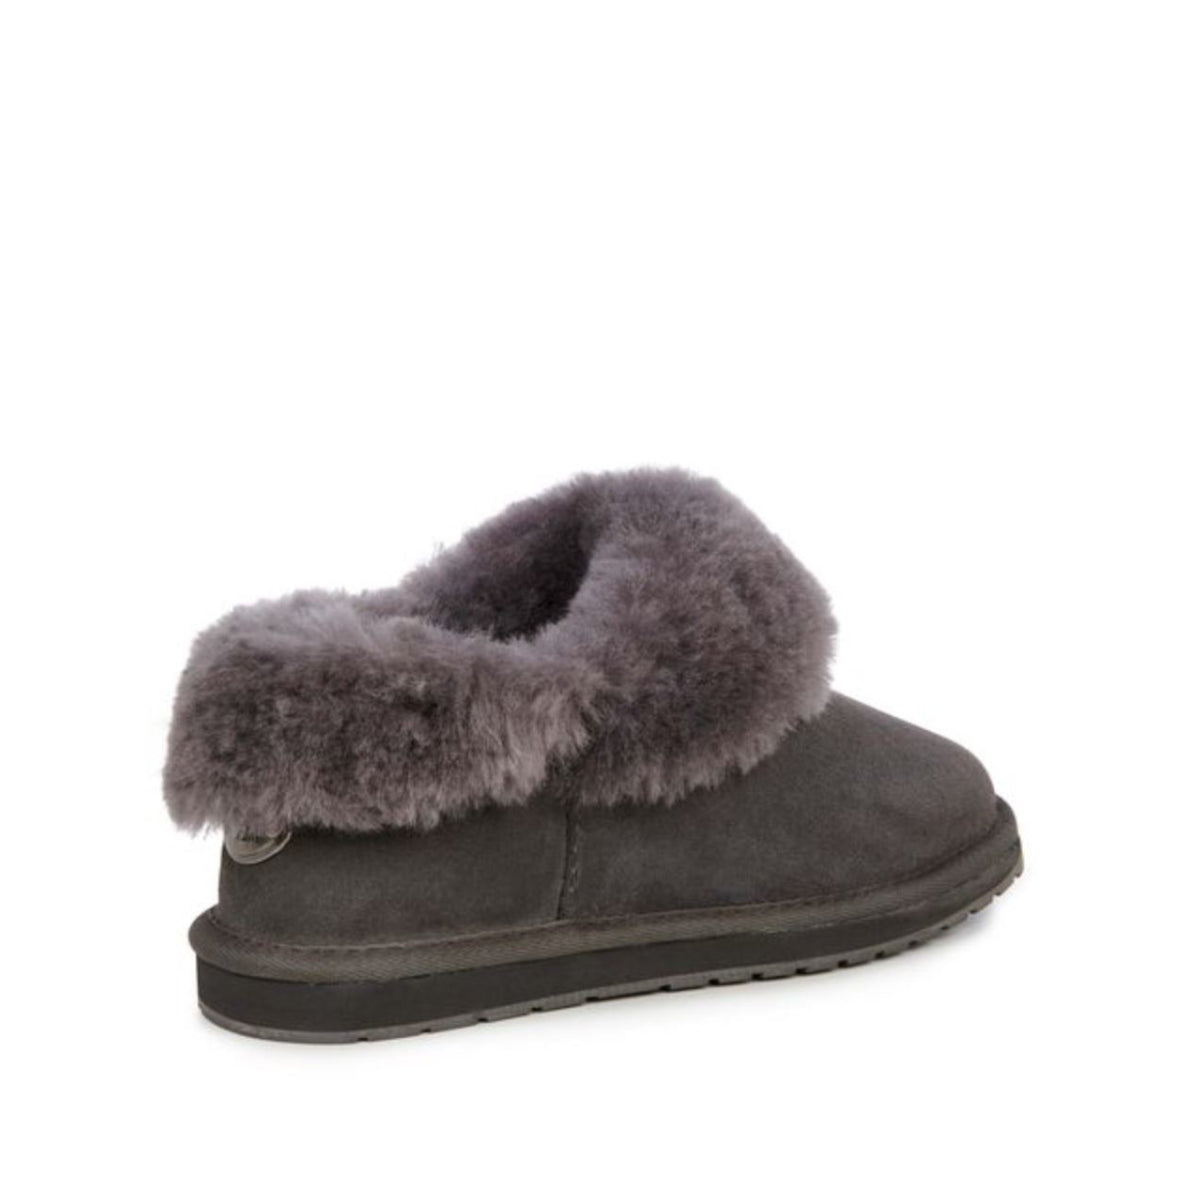 Mintaro - shoe&me - EMU - Slipper - Slipper, Winter, Womens